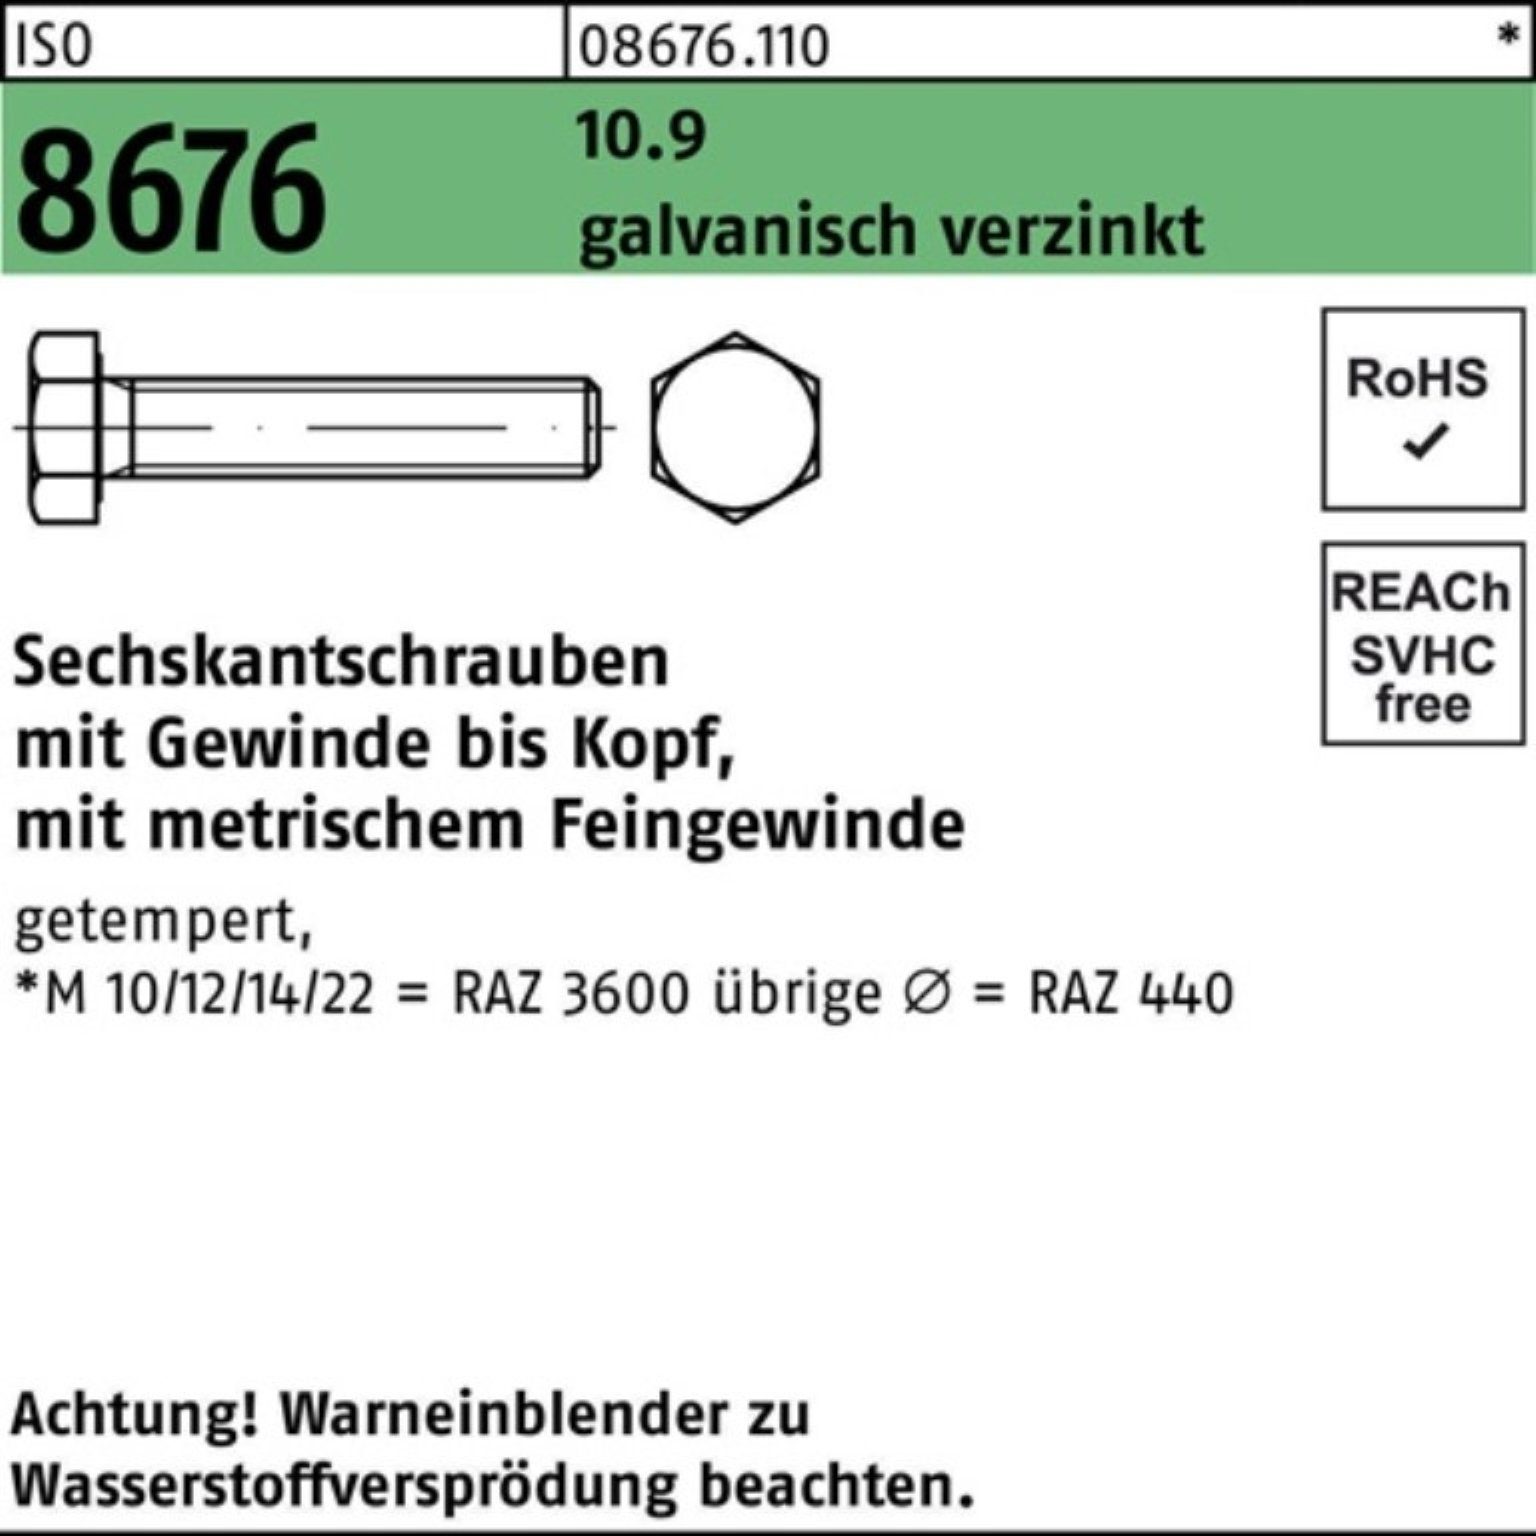 ISO Sechskantschraube 100er VG Reyher M12x1,5x Pack 8676 Sechskantschraube 10.9 1 45 galv.verz.